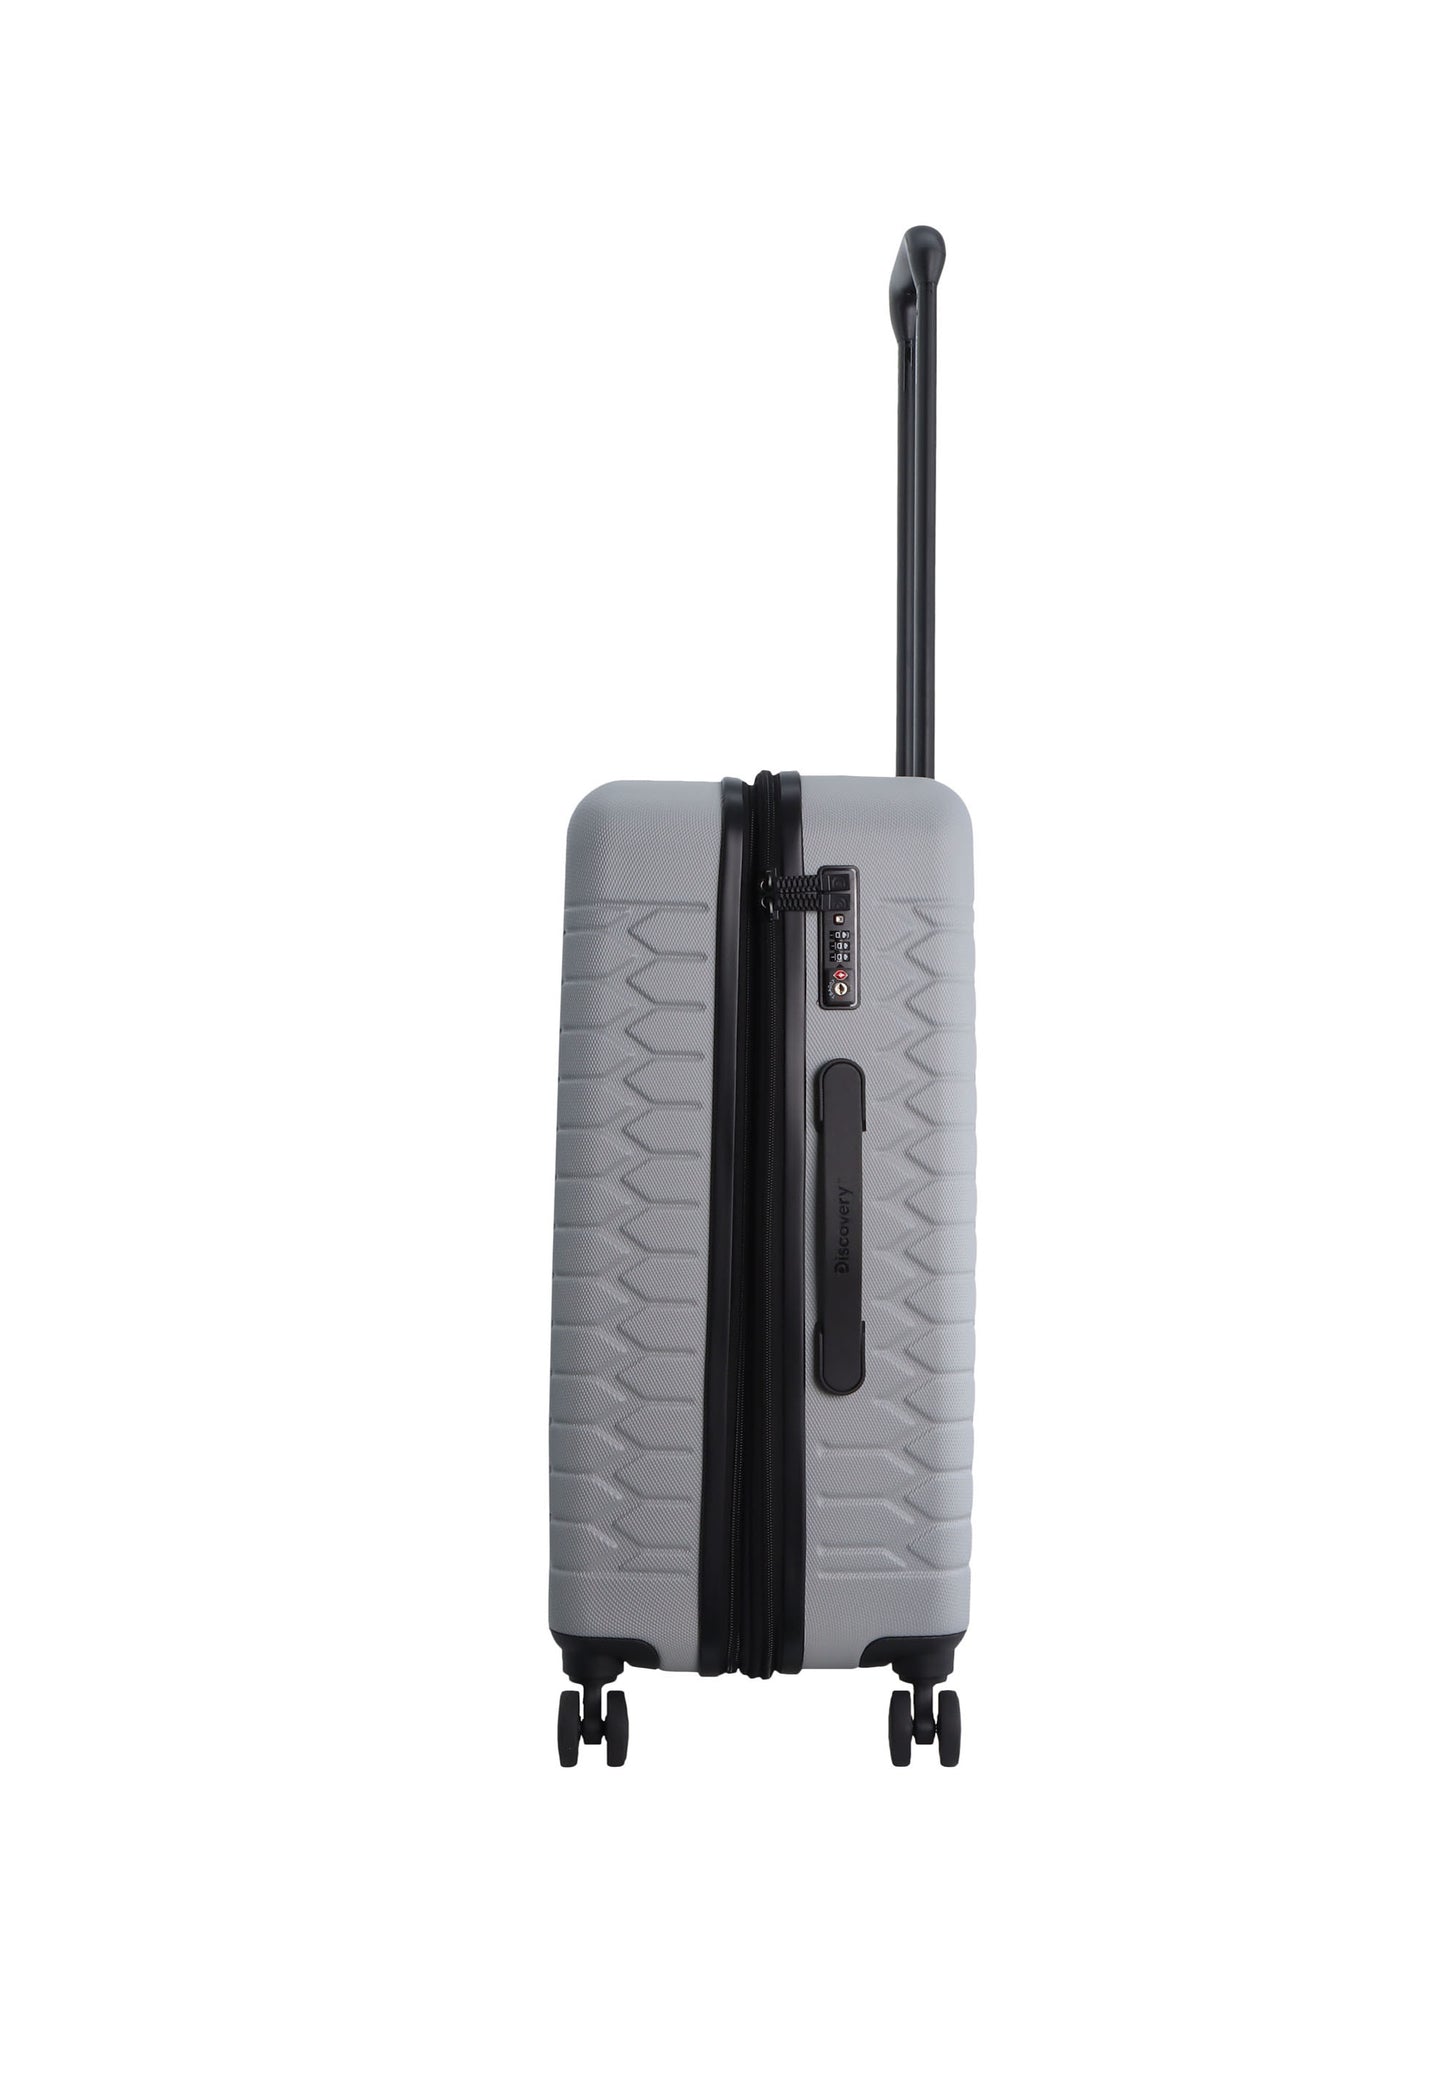 Valise rigide / trolley / valise de voyage Discovery Reptile - 67 cm (moyen) - Argent